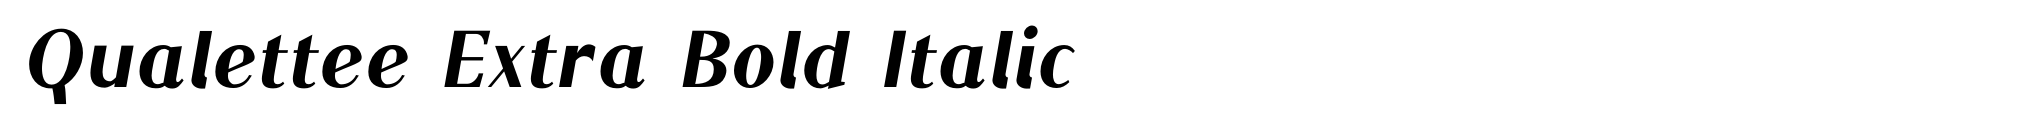 Qualettee Extra Bold Italic image